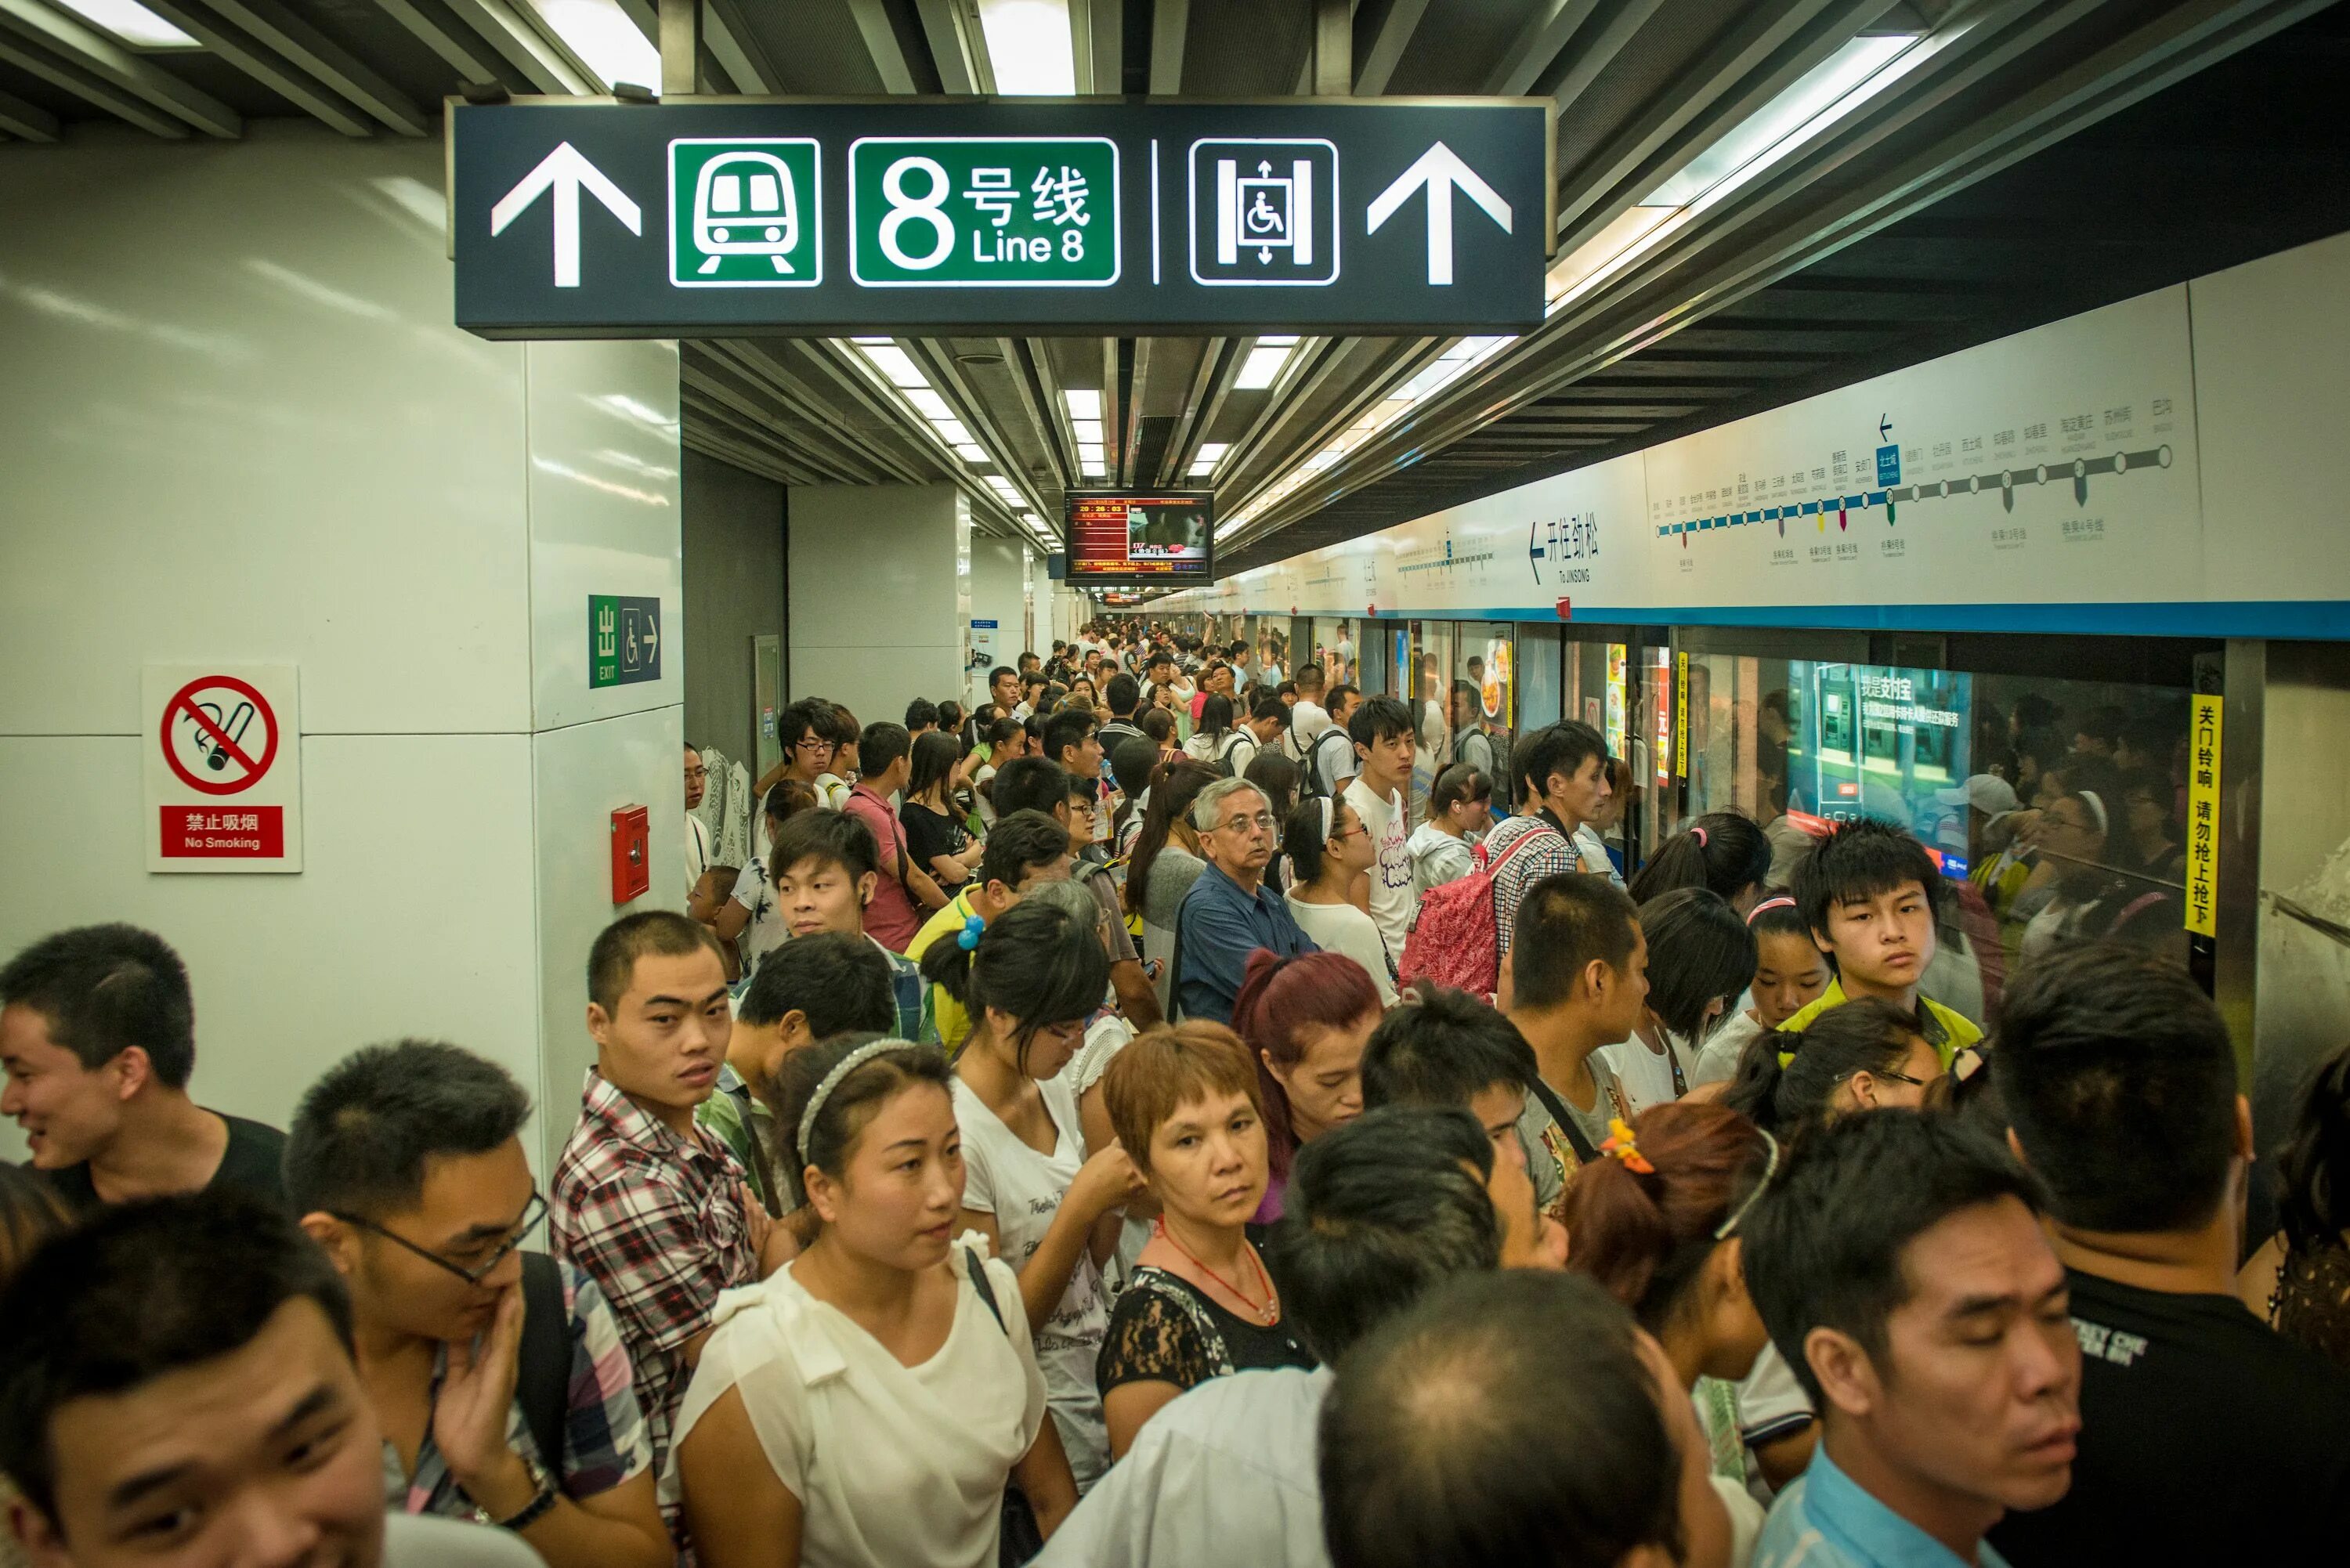 Metro Beijing Subway. China Beijing Subway. Метро в Китае. Метро Китая Пекин.